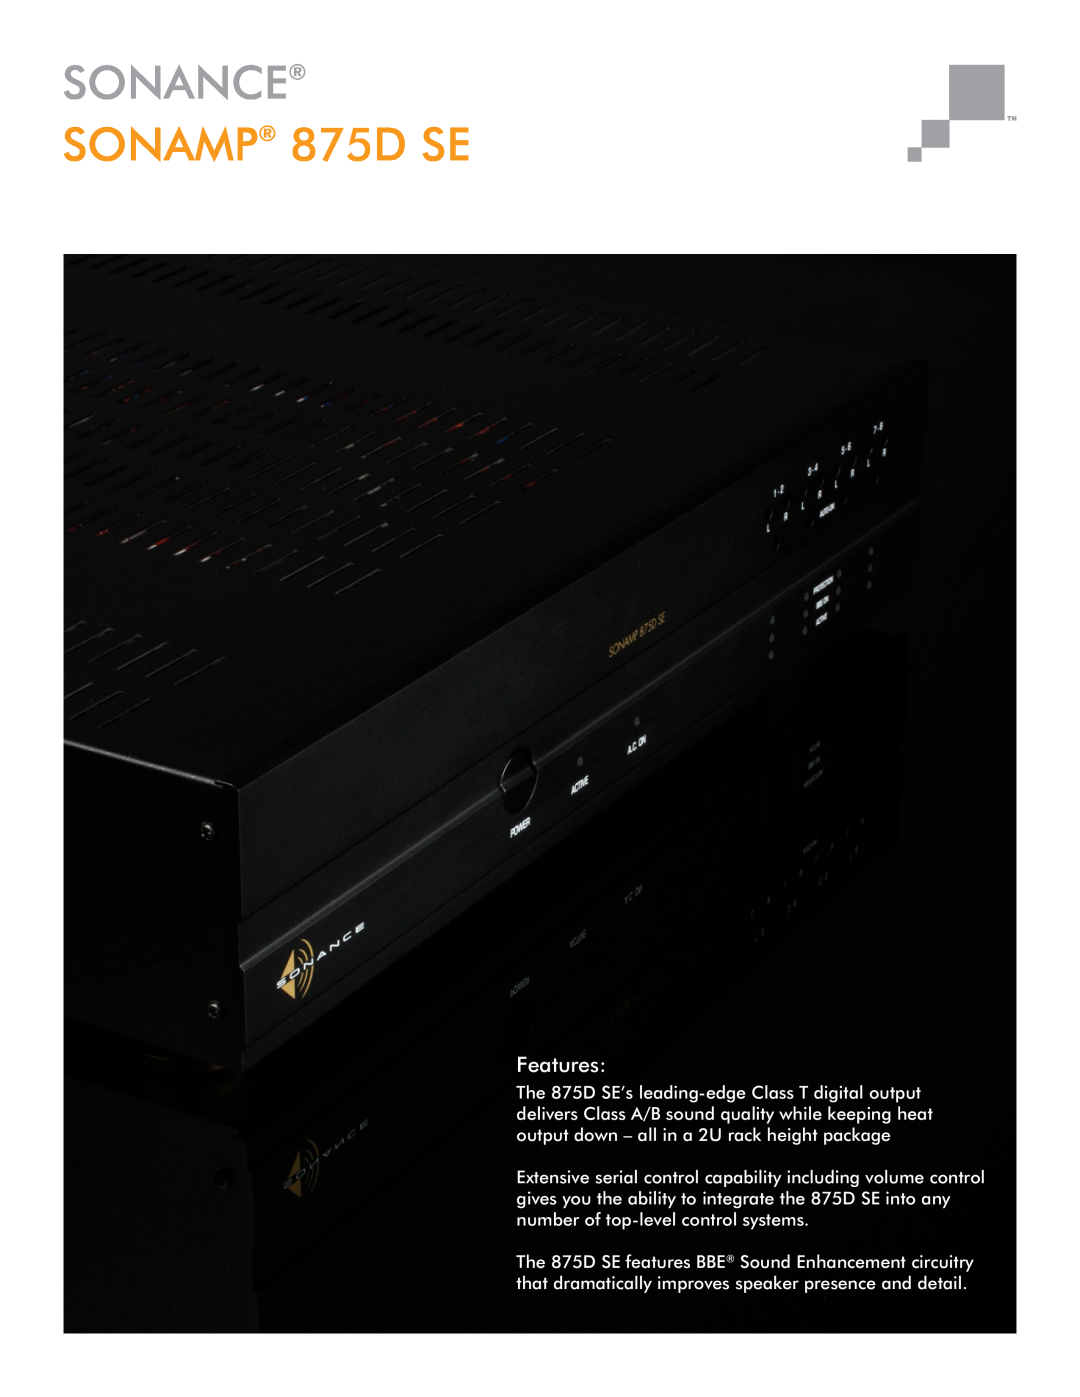 Sonance RS-232, 33-5052 manual SONAMP 875D SE, Sonance, Features 